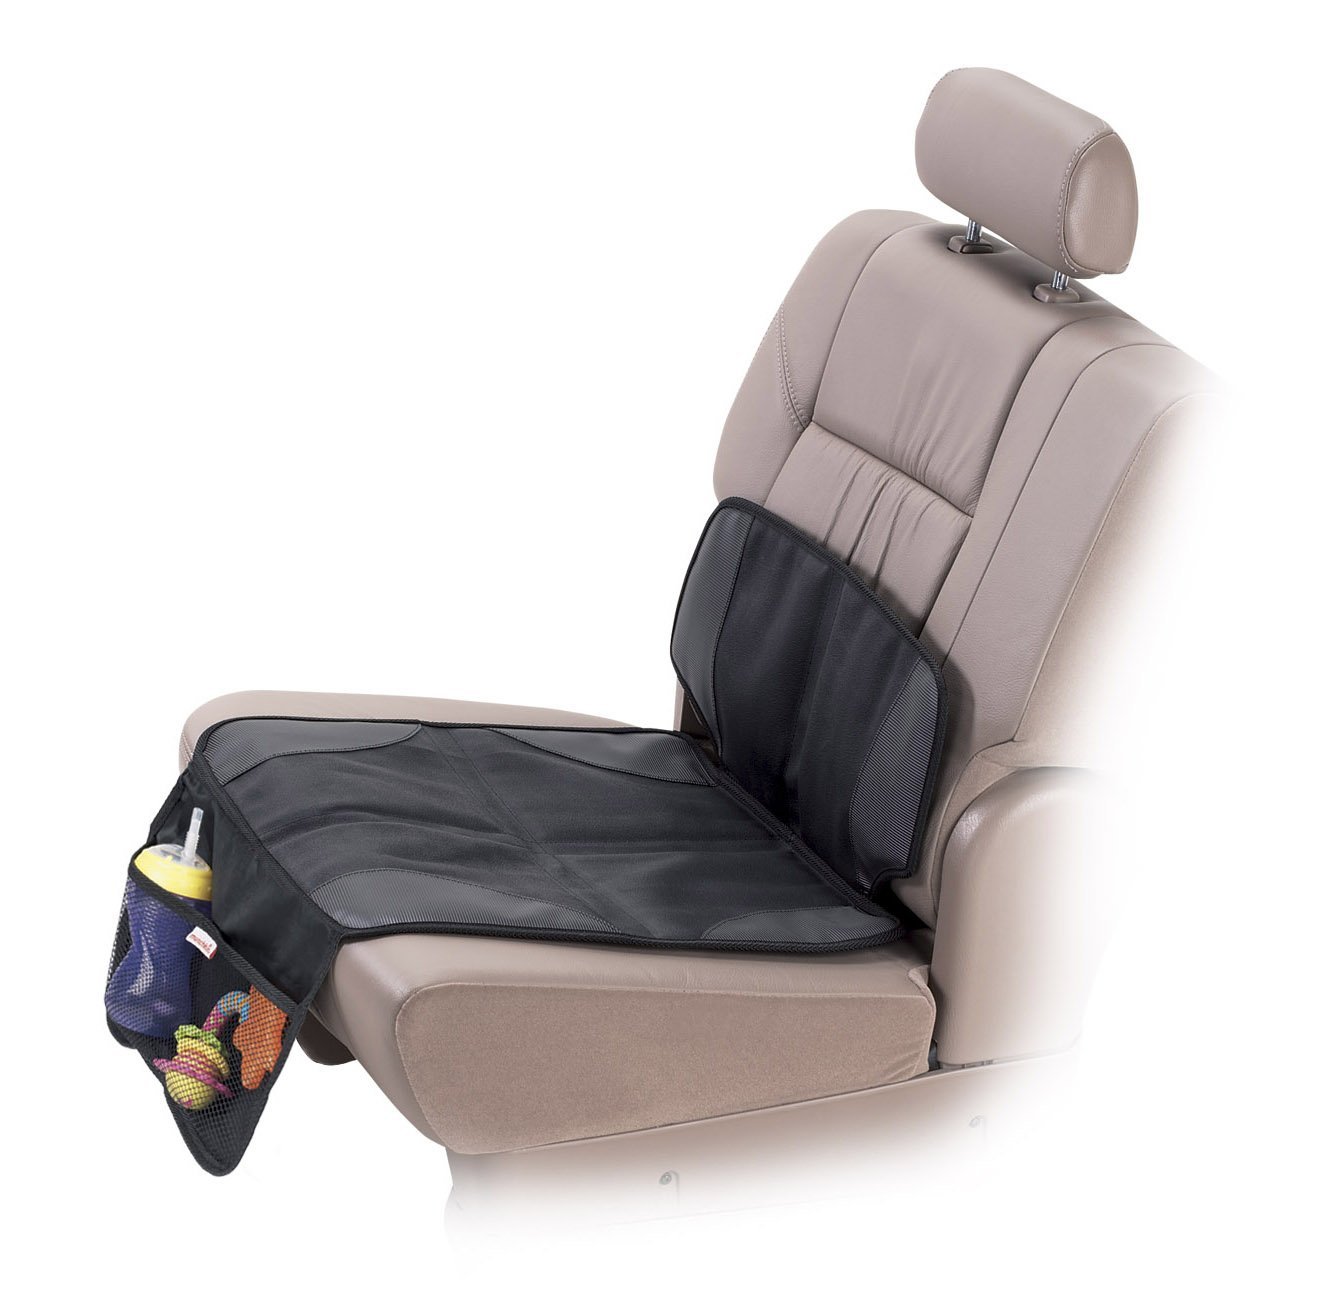 36% Off Munchkin Auto Seat Protector